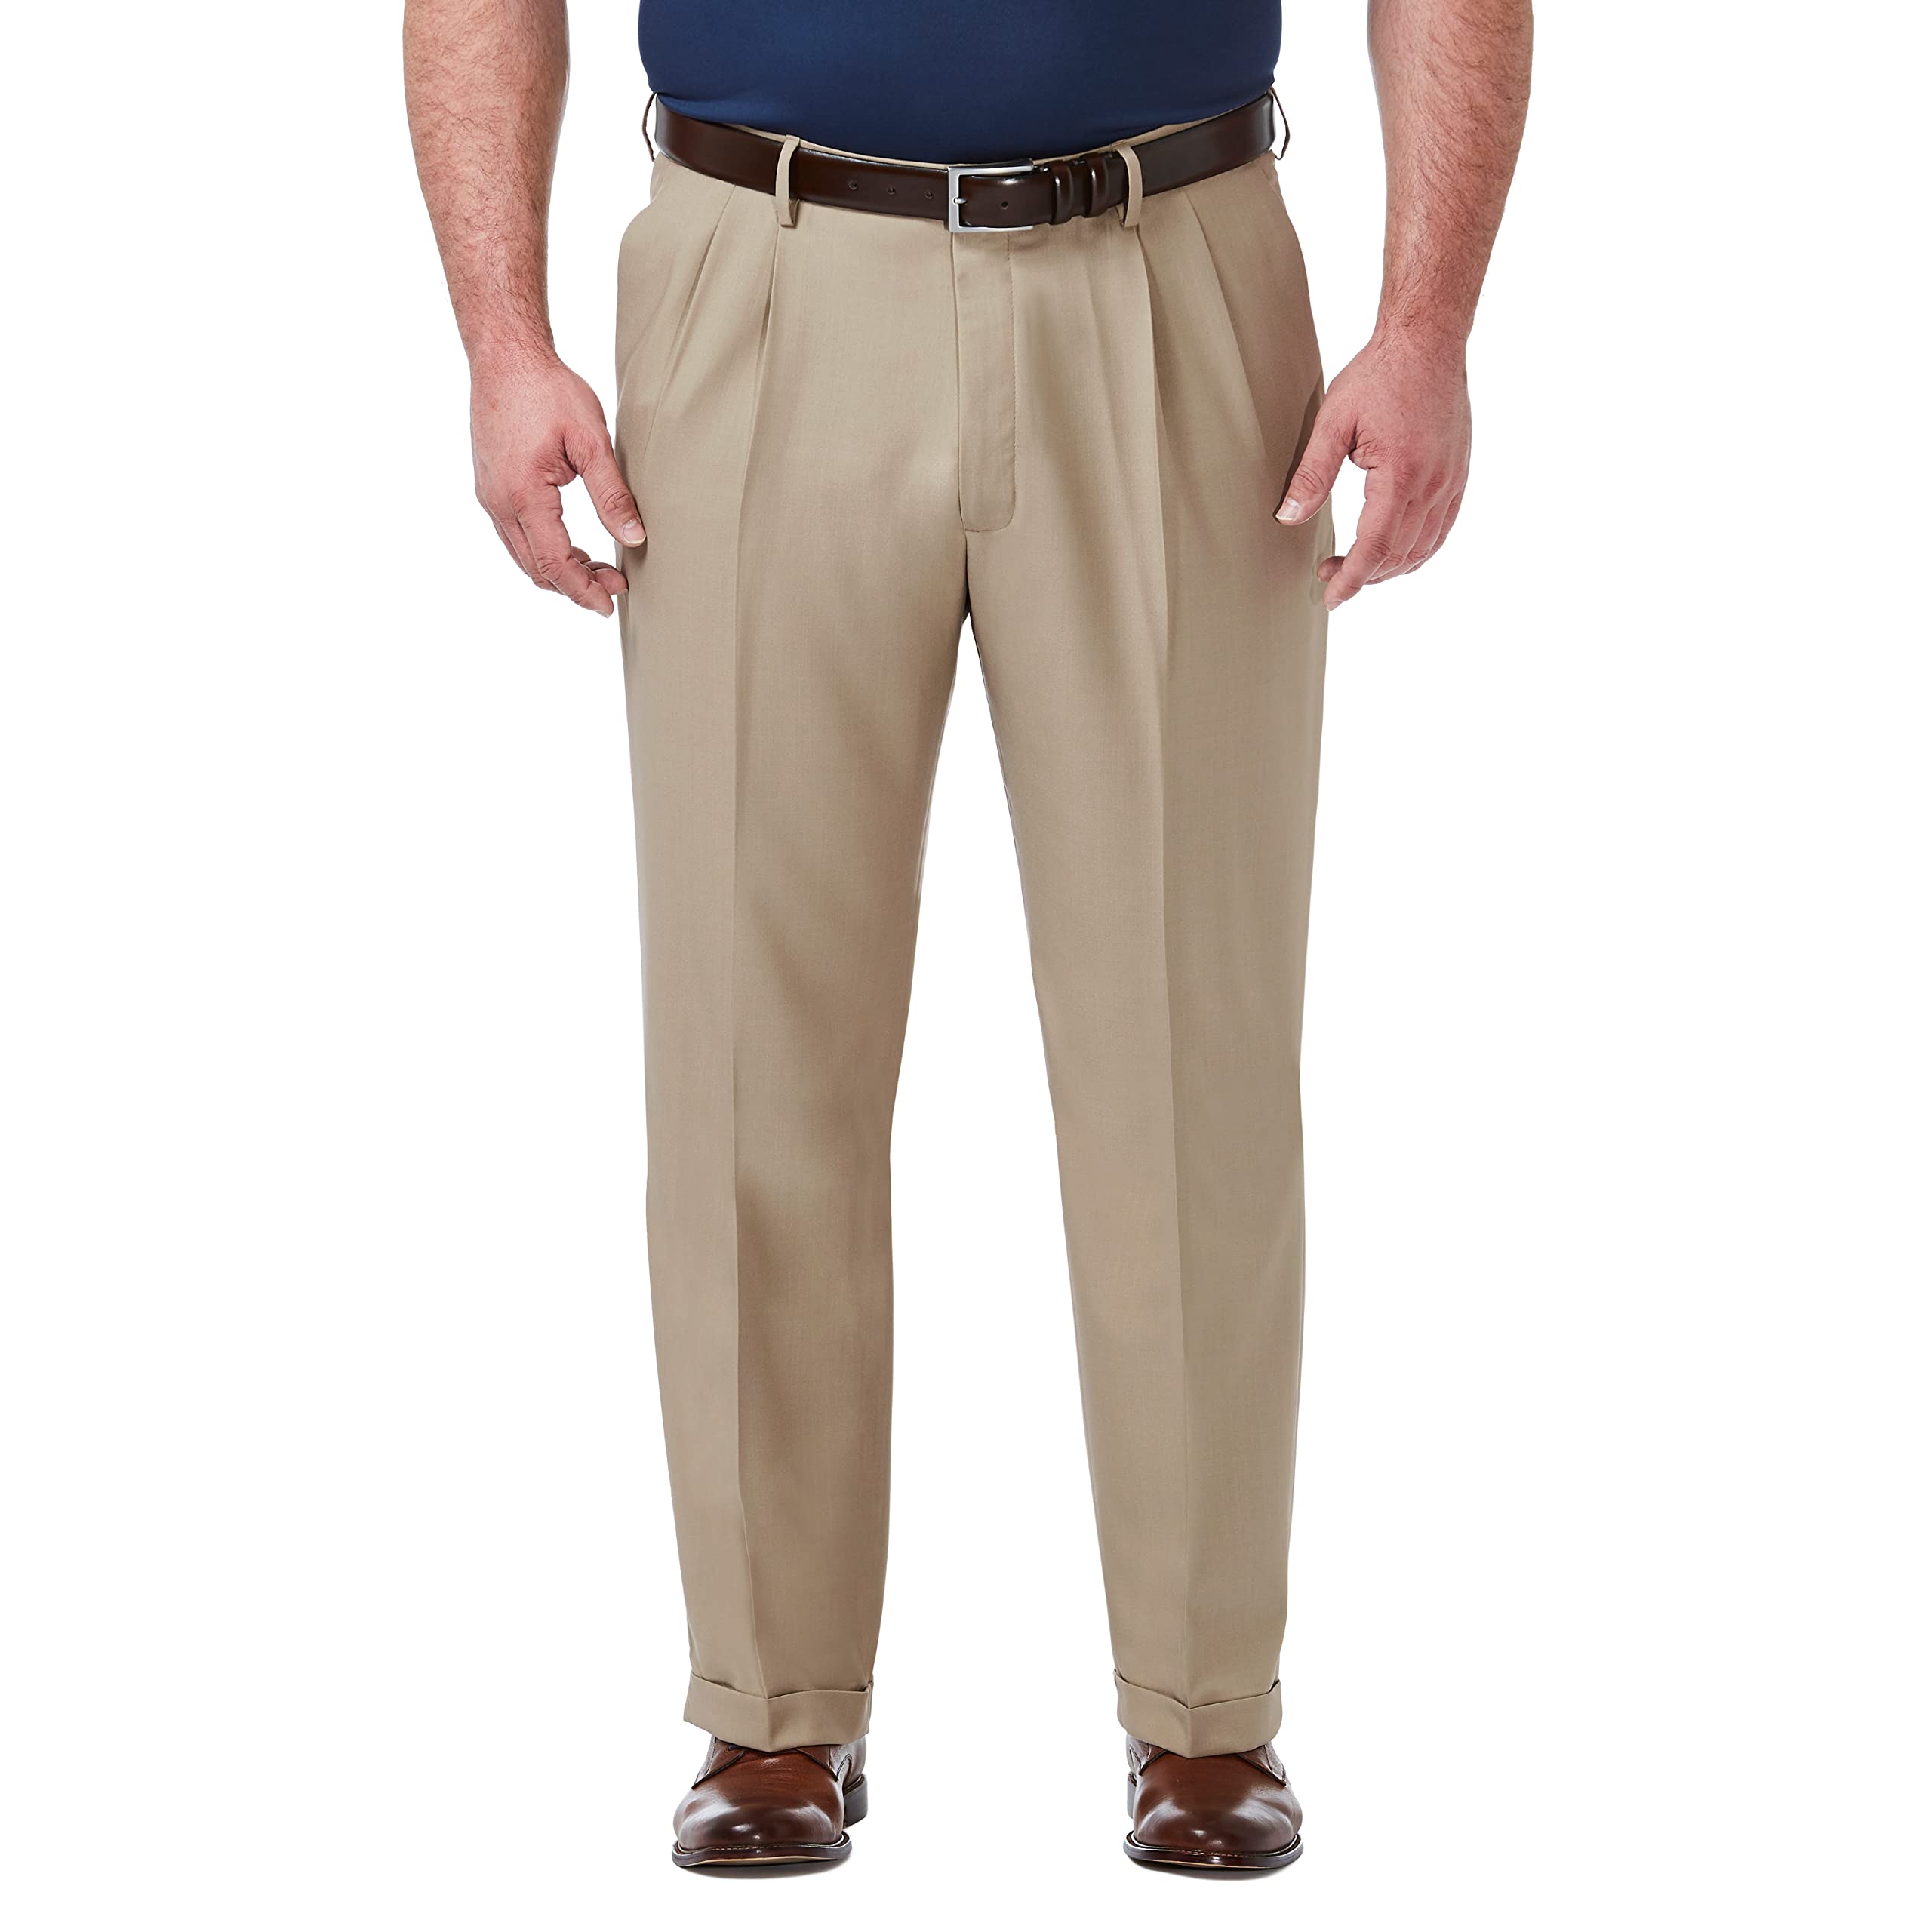 Haggar Mens Premium comfort classic Fit Pleat Front Pant Reg and Big  Tall Sizes, Medium Khaki BT, 48W x 34L